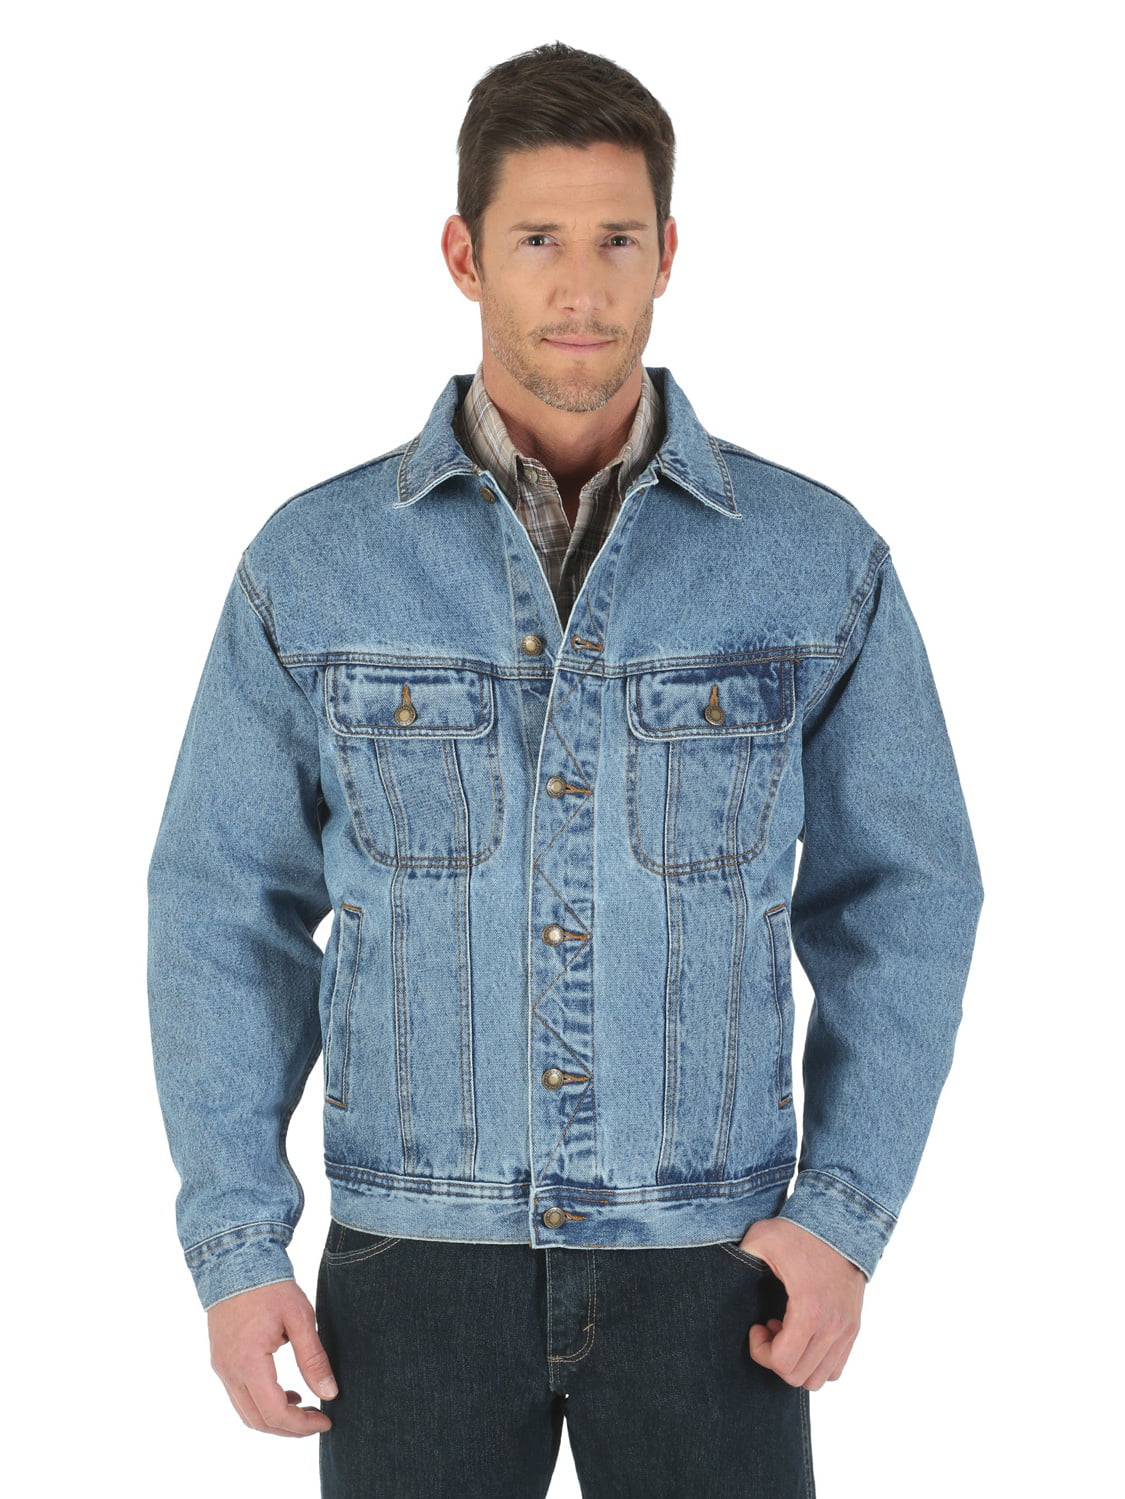 Wrangler - Wrangler Denim Jacket (Big & Tall Sizes) - Walmart.com